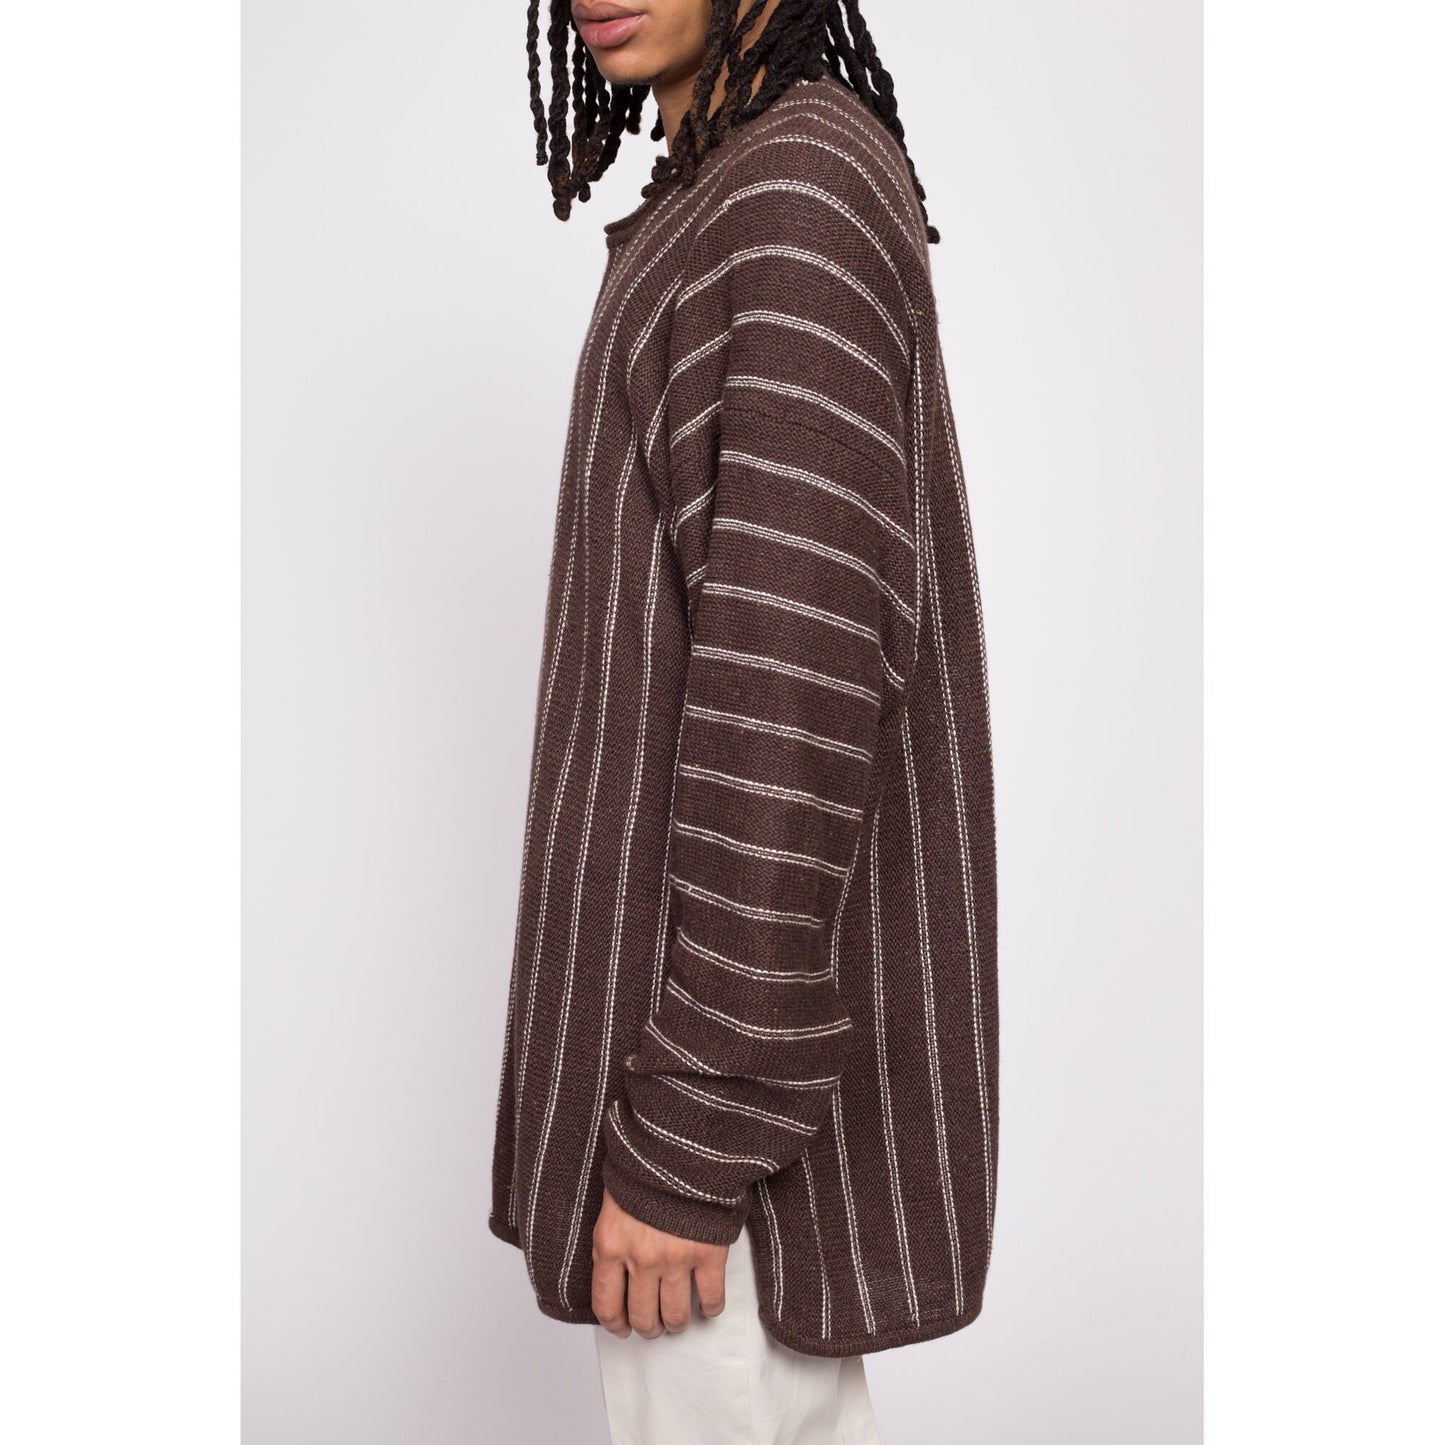 90s Brown & White Striped Tunic Sweater - Men's Medium to Large